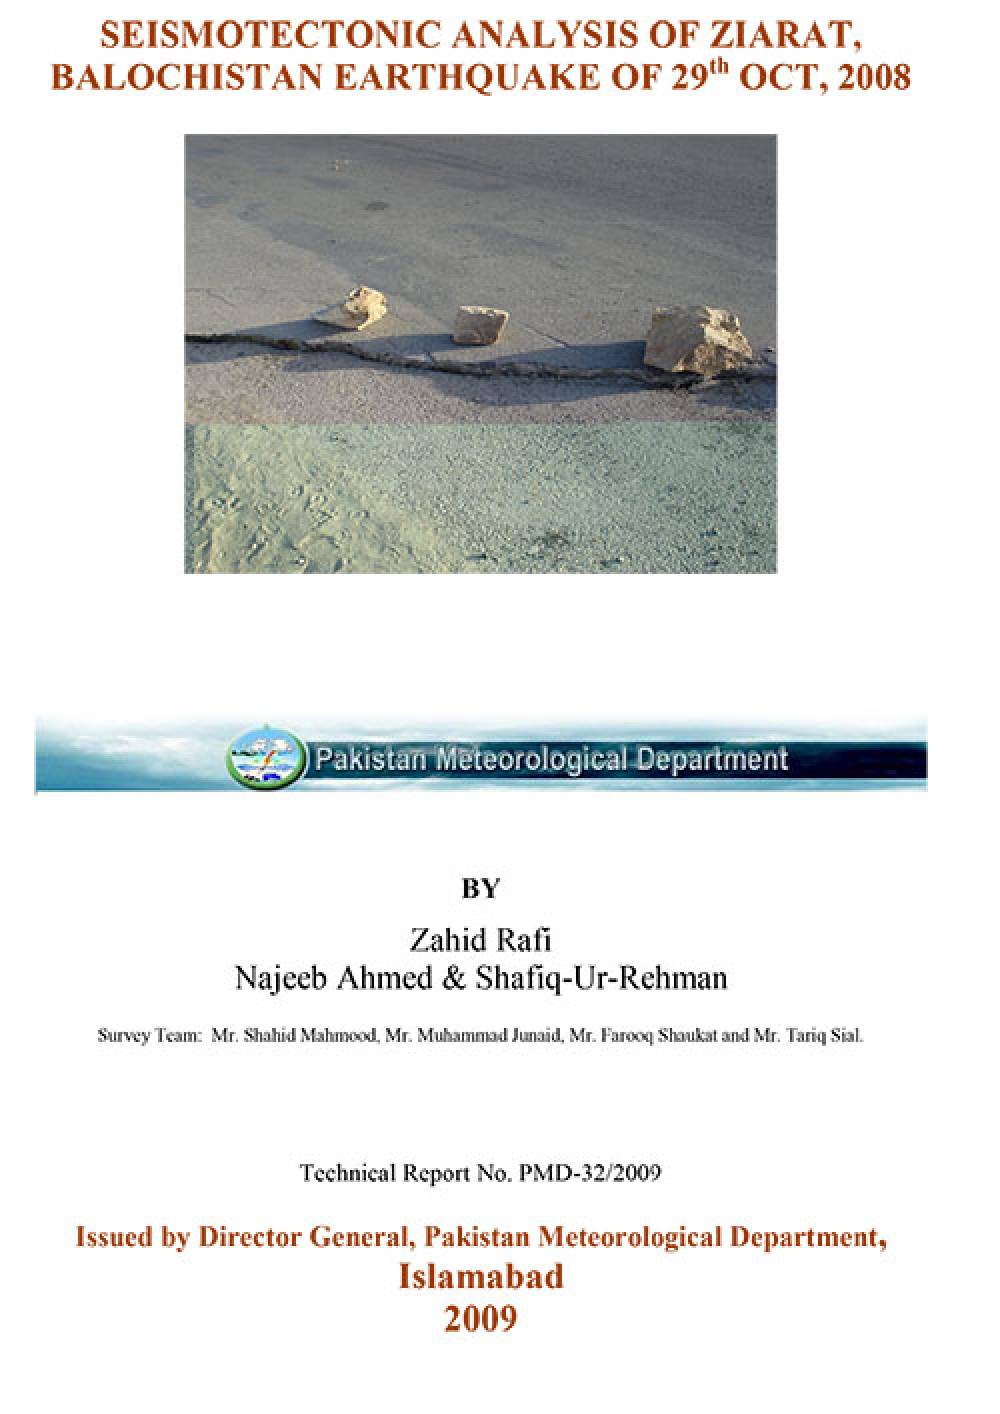 Seismotectonics Analysis of Ziarat Balochistan Earthquake of 29th Oct 2008